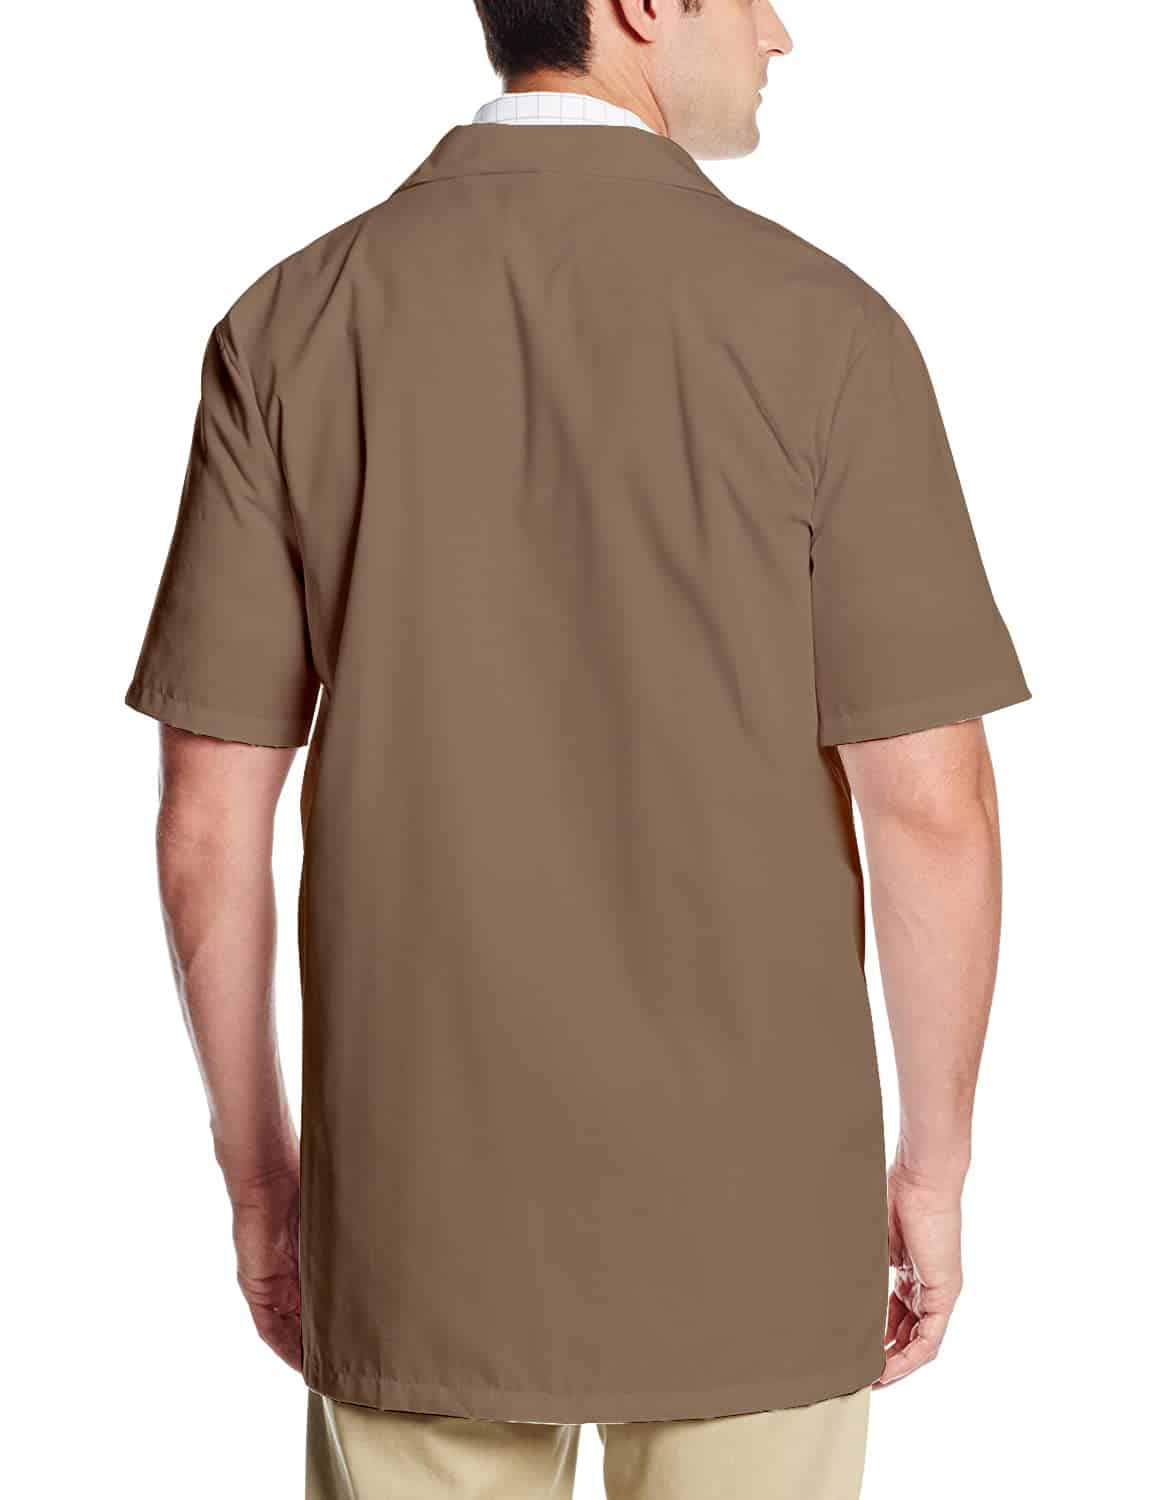 Brown Lab Coat - Half Sleeve (Khaki)